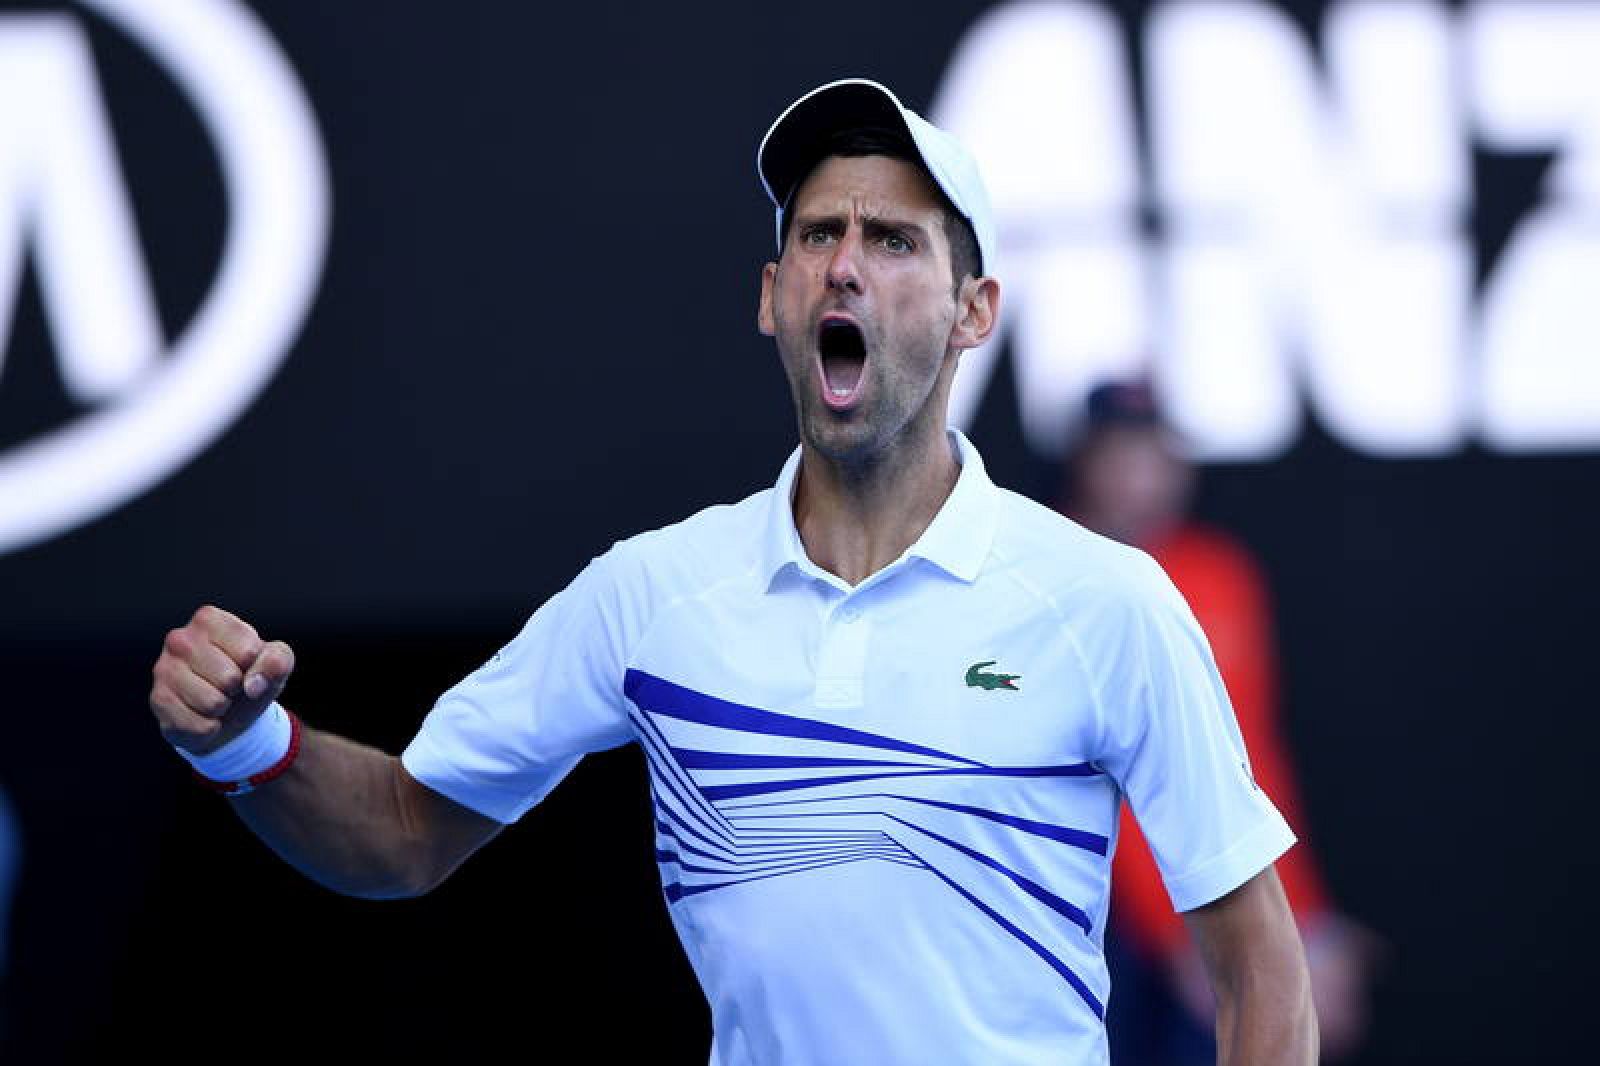 Tennis Australian Open 2019 - Djokovic